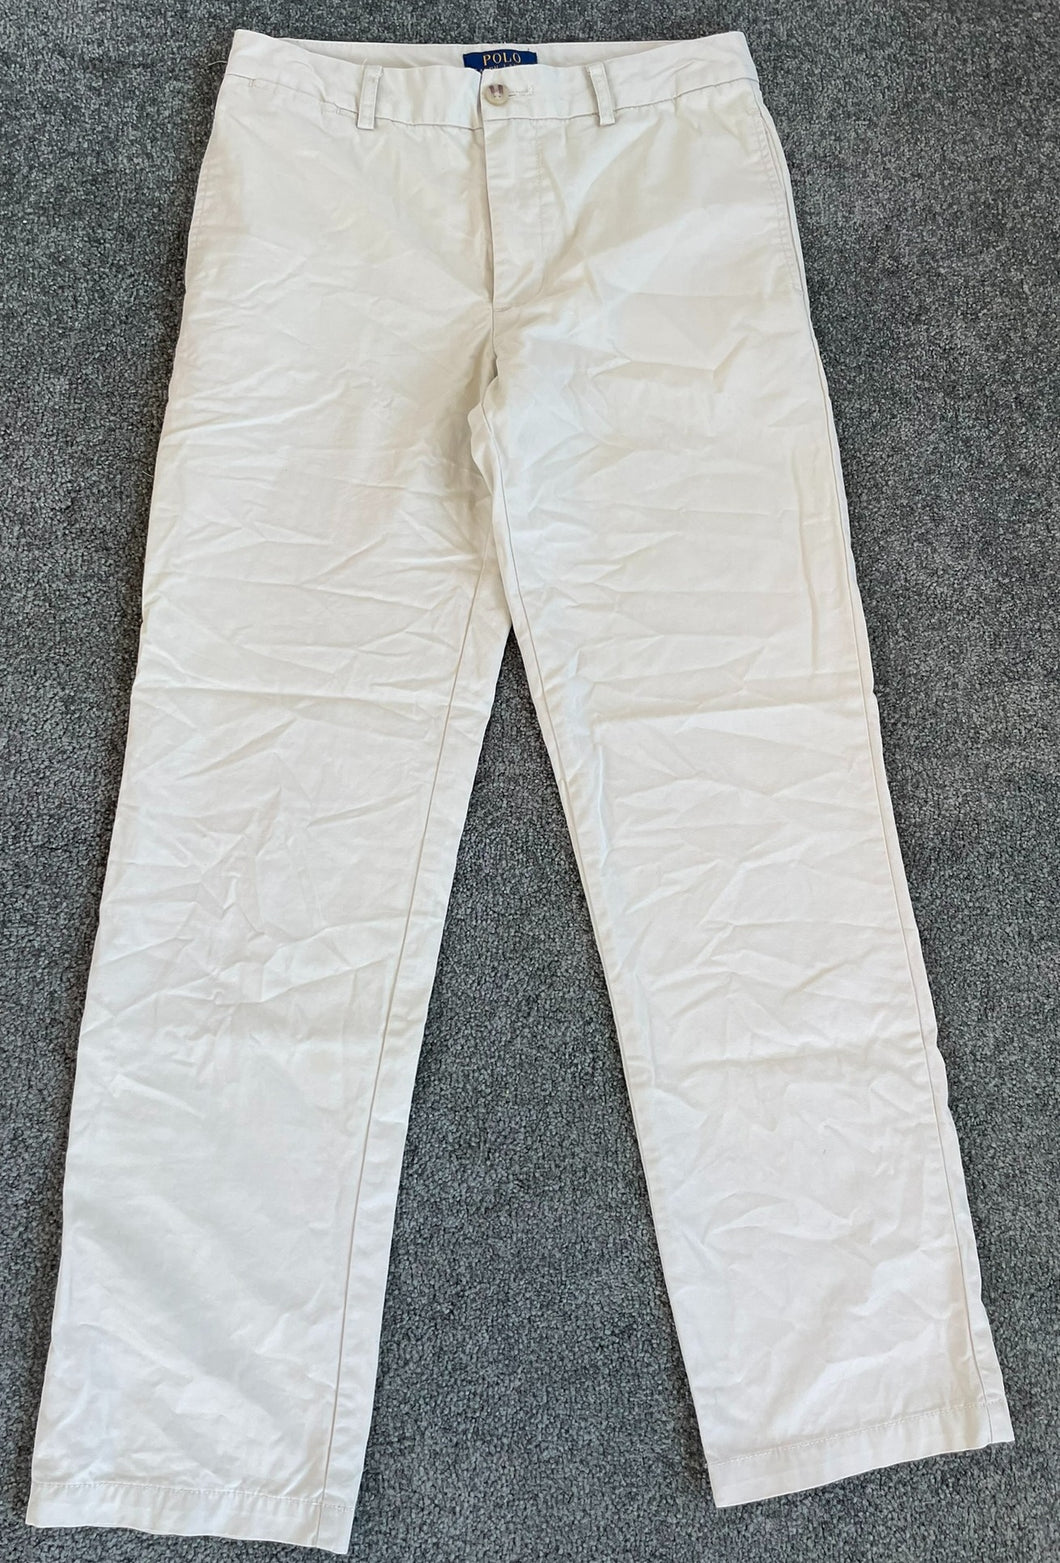 Polo Ralph Lauren 16 Khaki Trousers 16